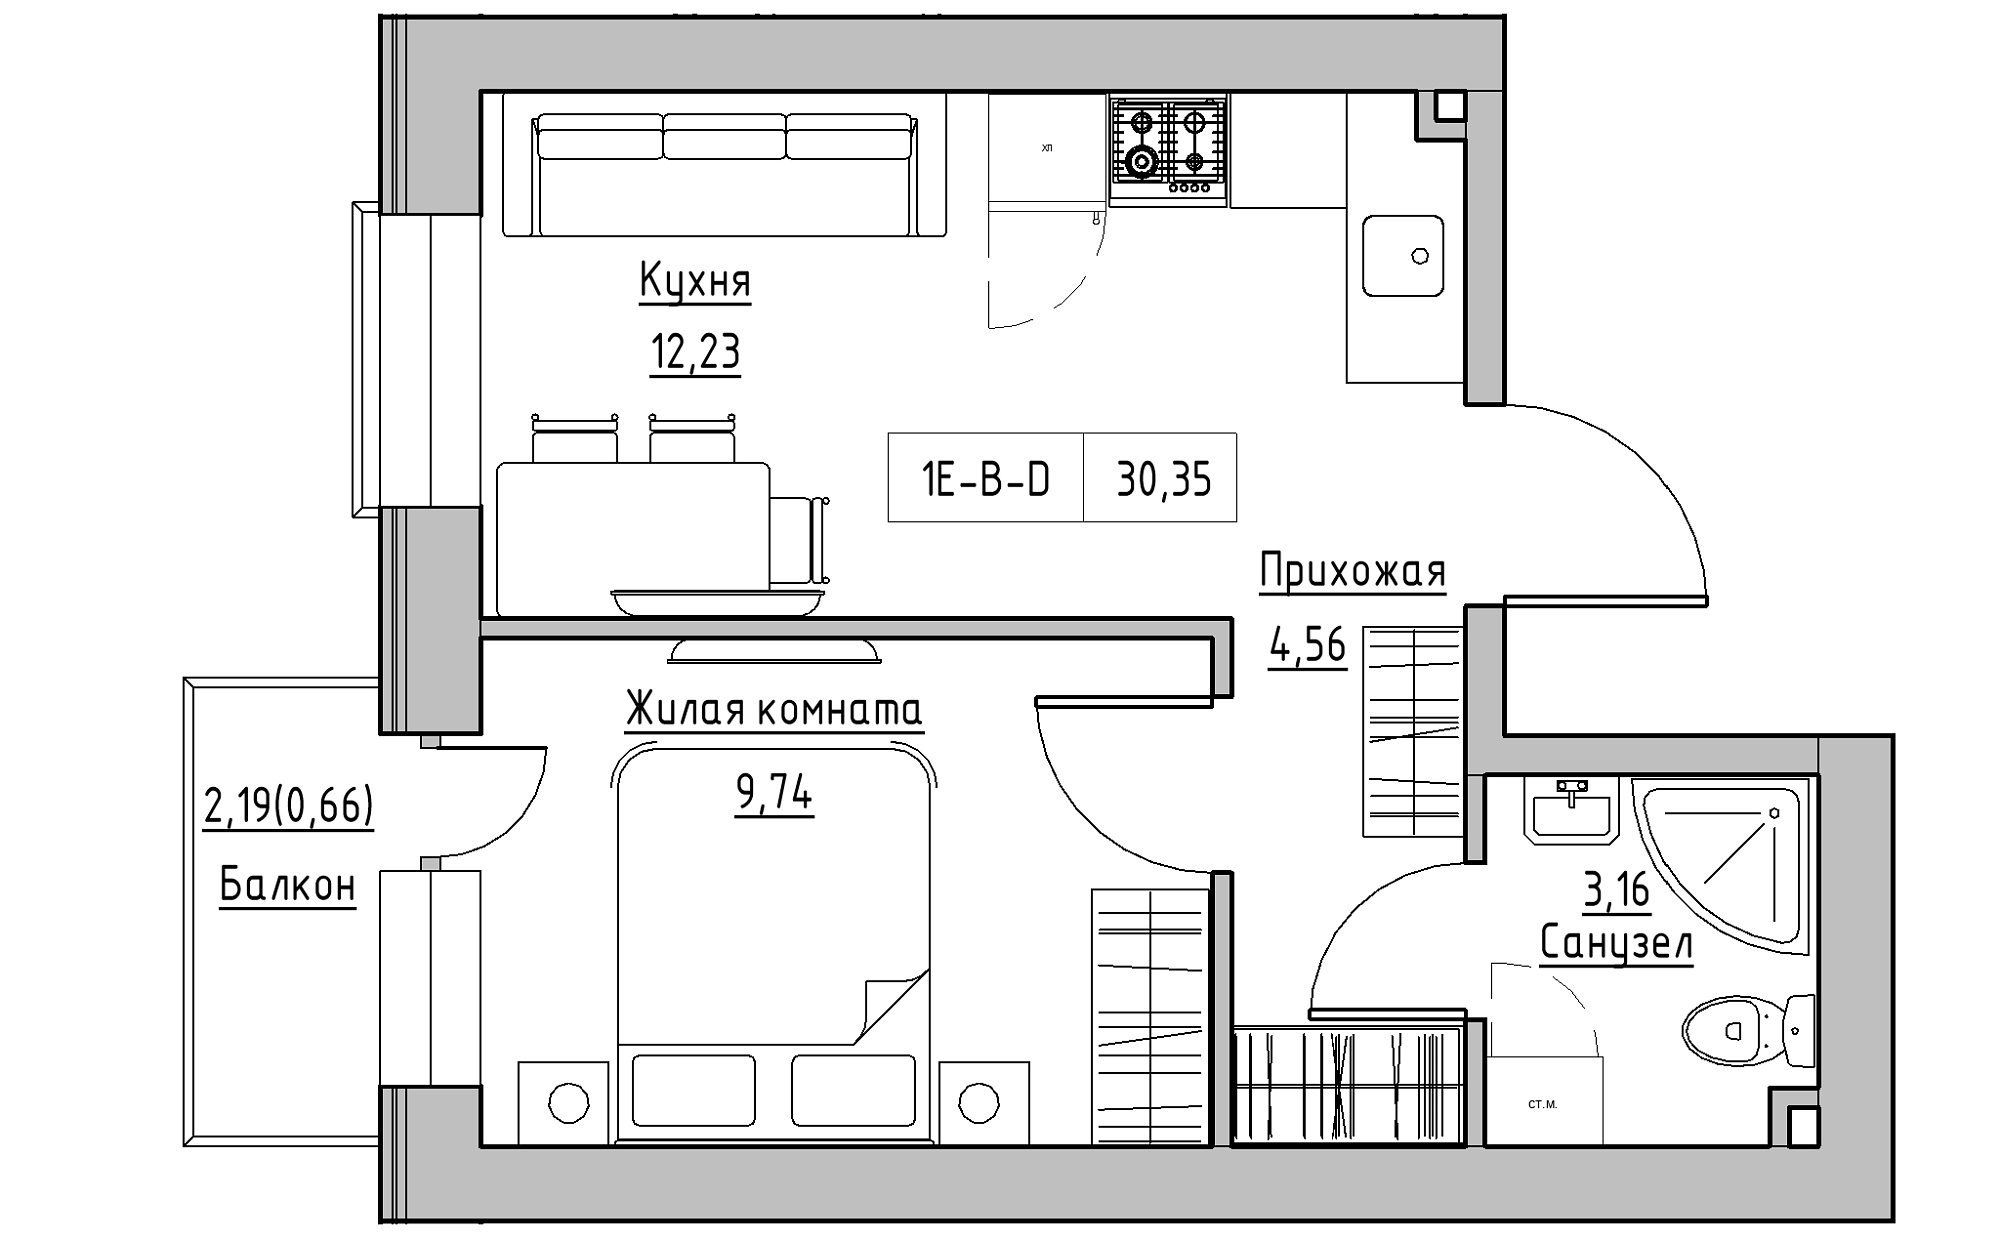 Planning 1-rm flats area 30.35m2, KS-022-03/0012.